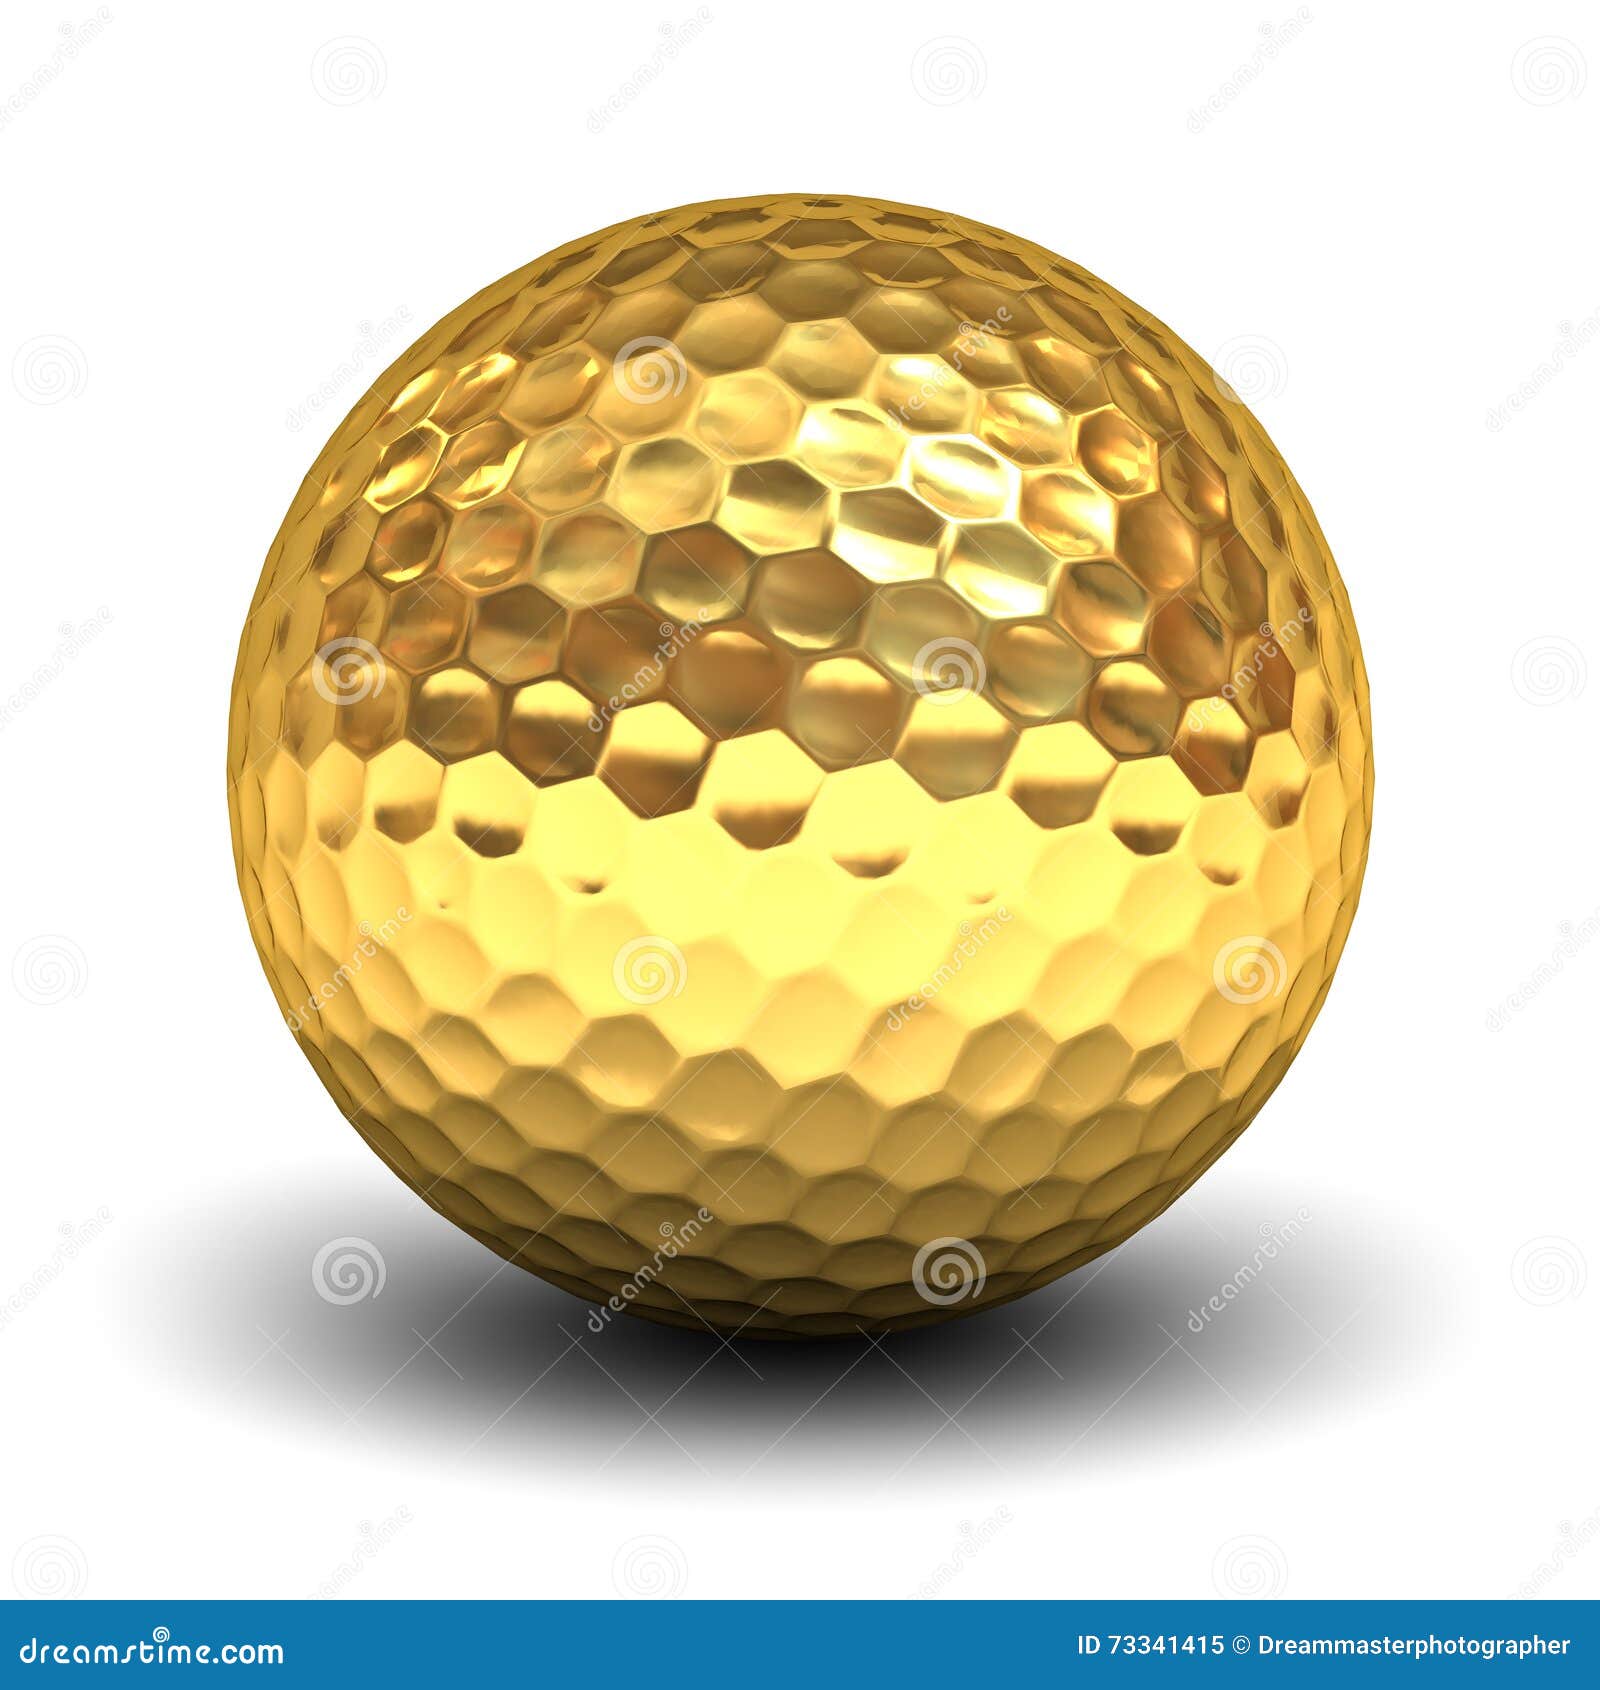 Gold Golf Ball Santa Hat Stock Photo | CartoonDealer.com #79938720